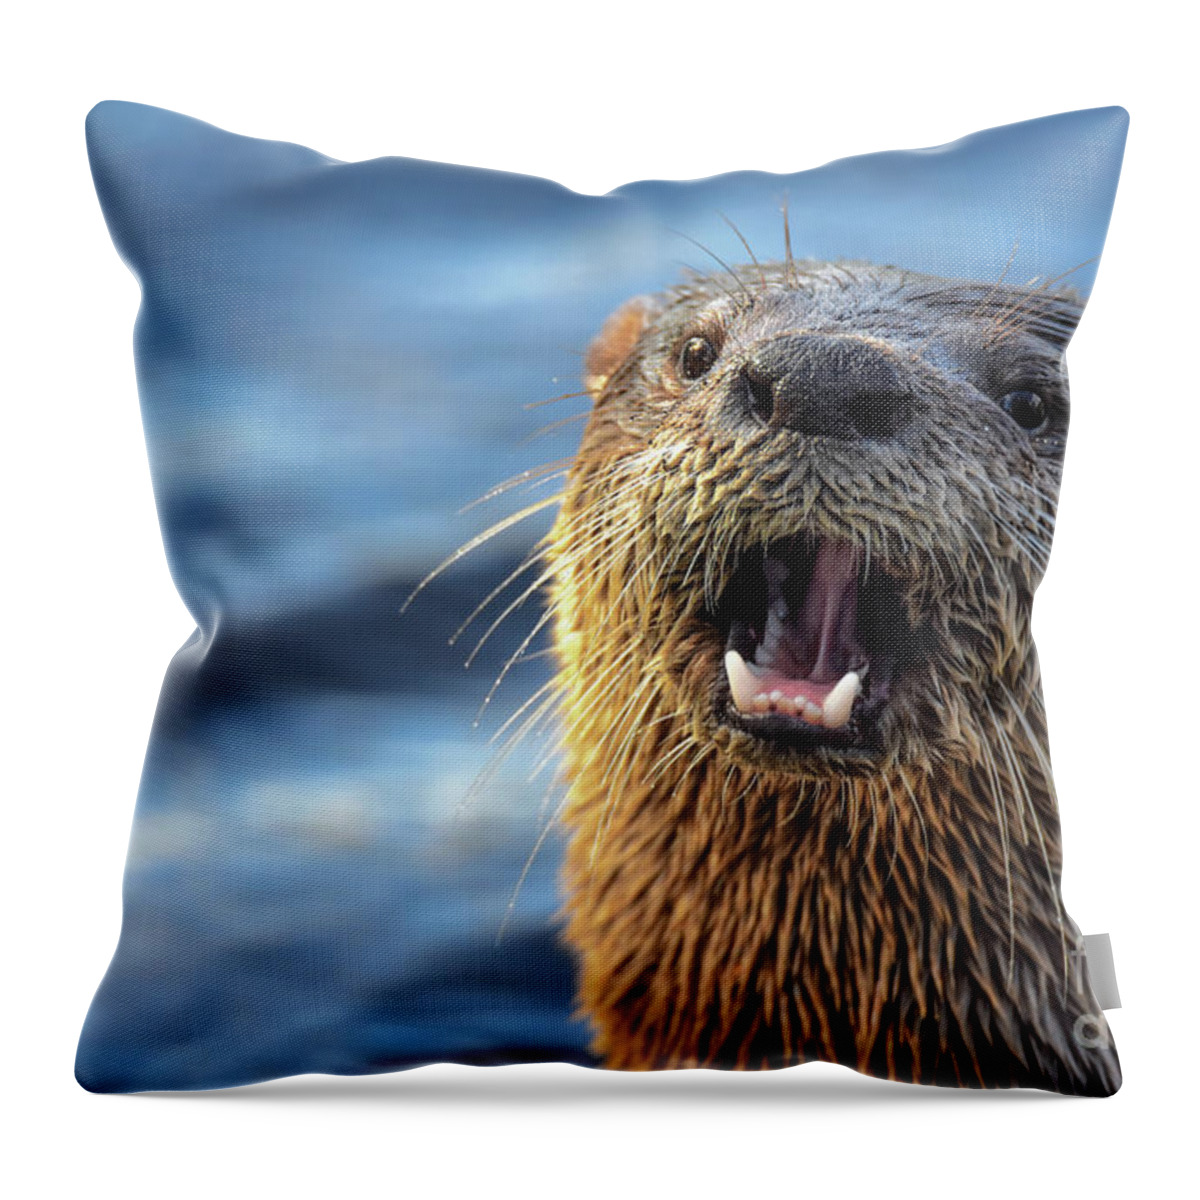 River Otter Throw Pillow featuring the photograph Otter Nonsense by Julie Adair